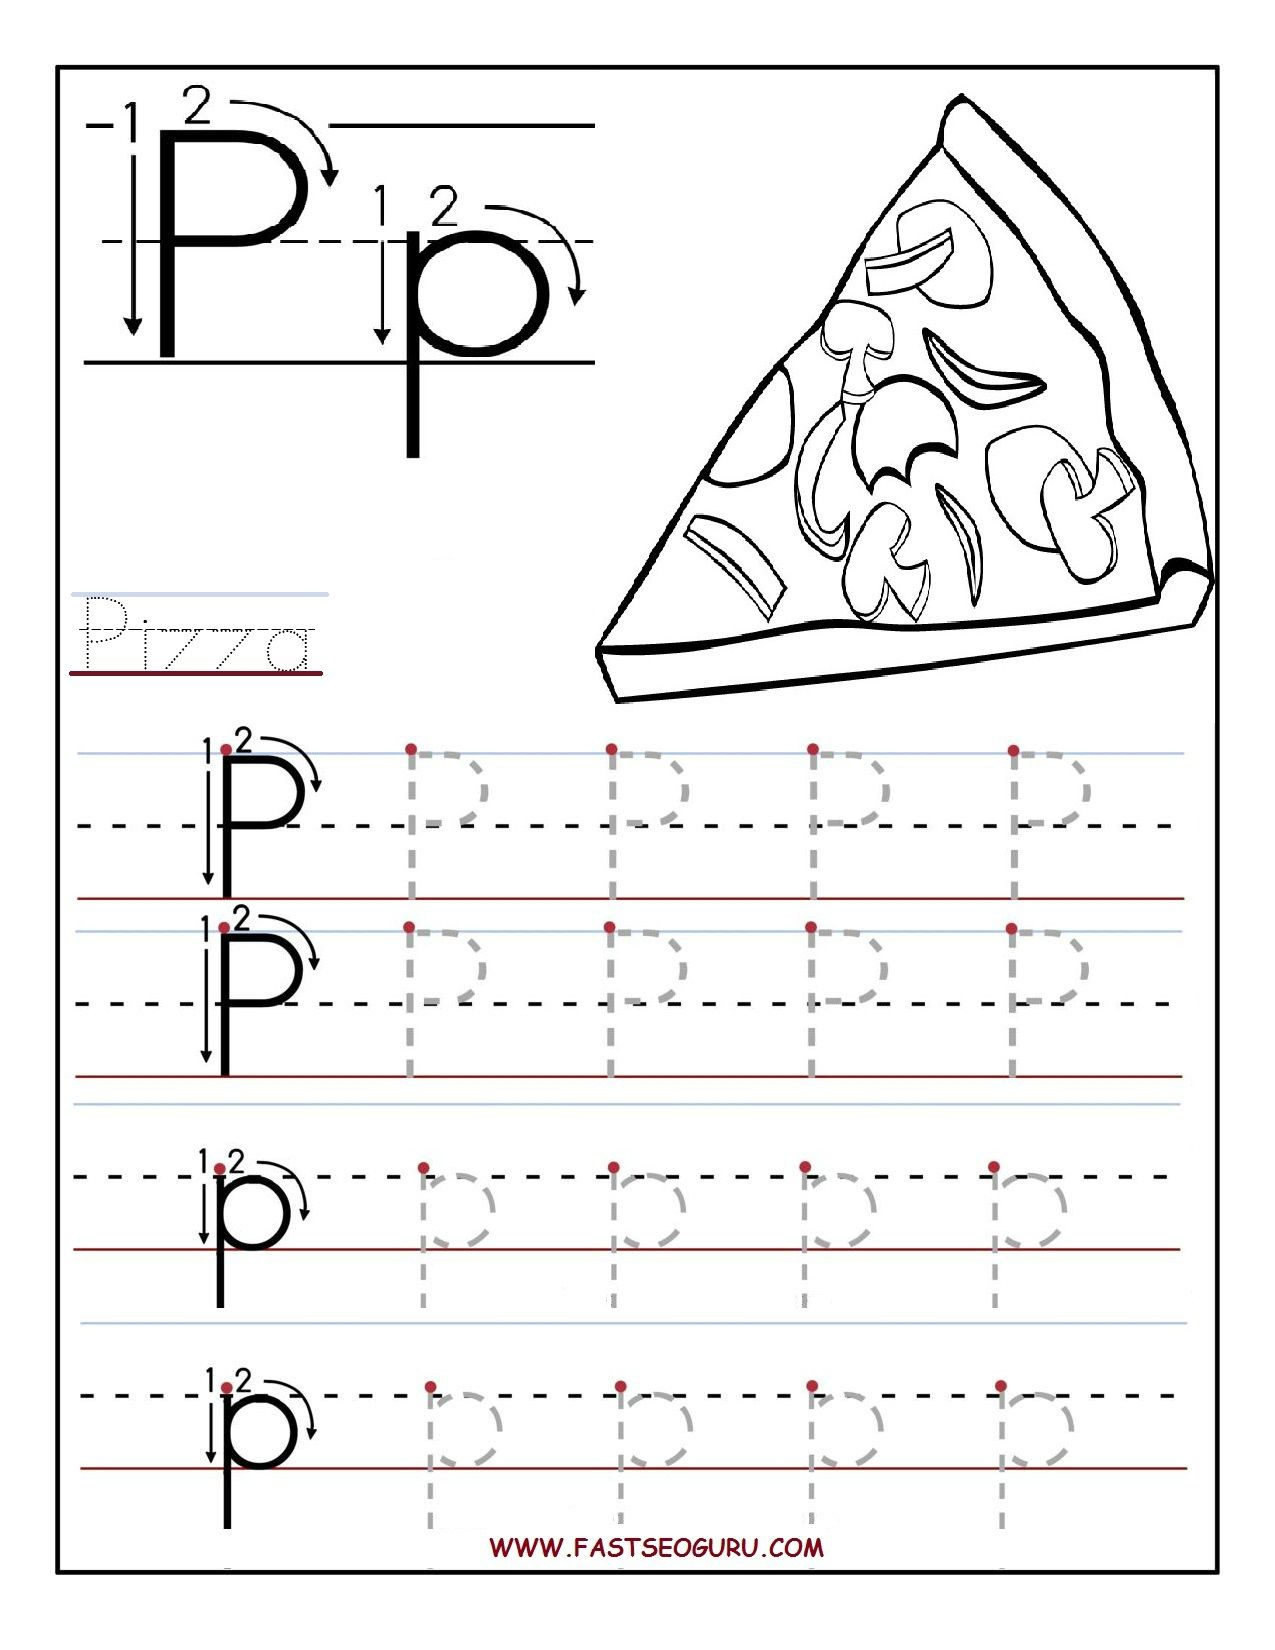 Printable Letter P Tracing Worksheets For Preschool Preschool 